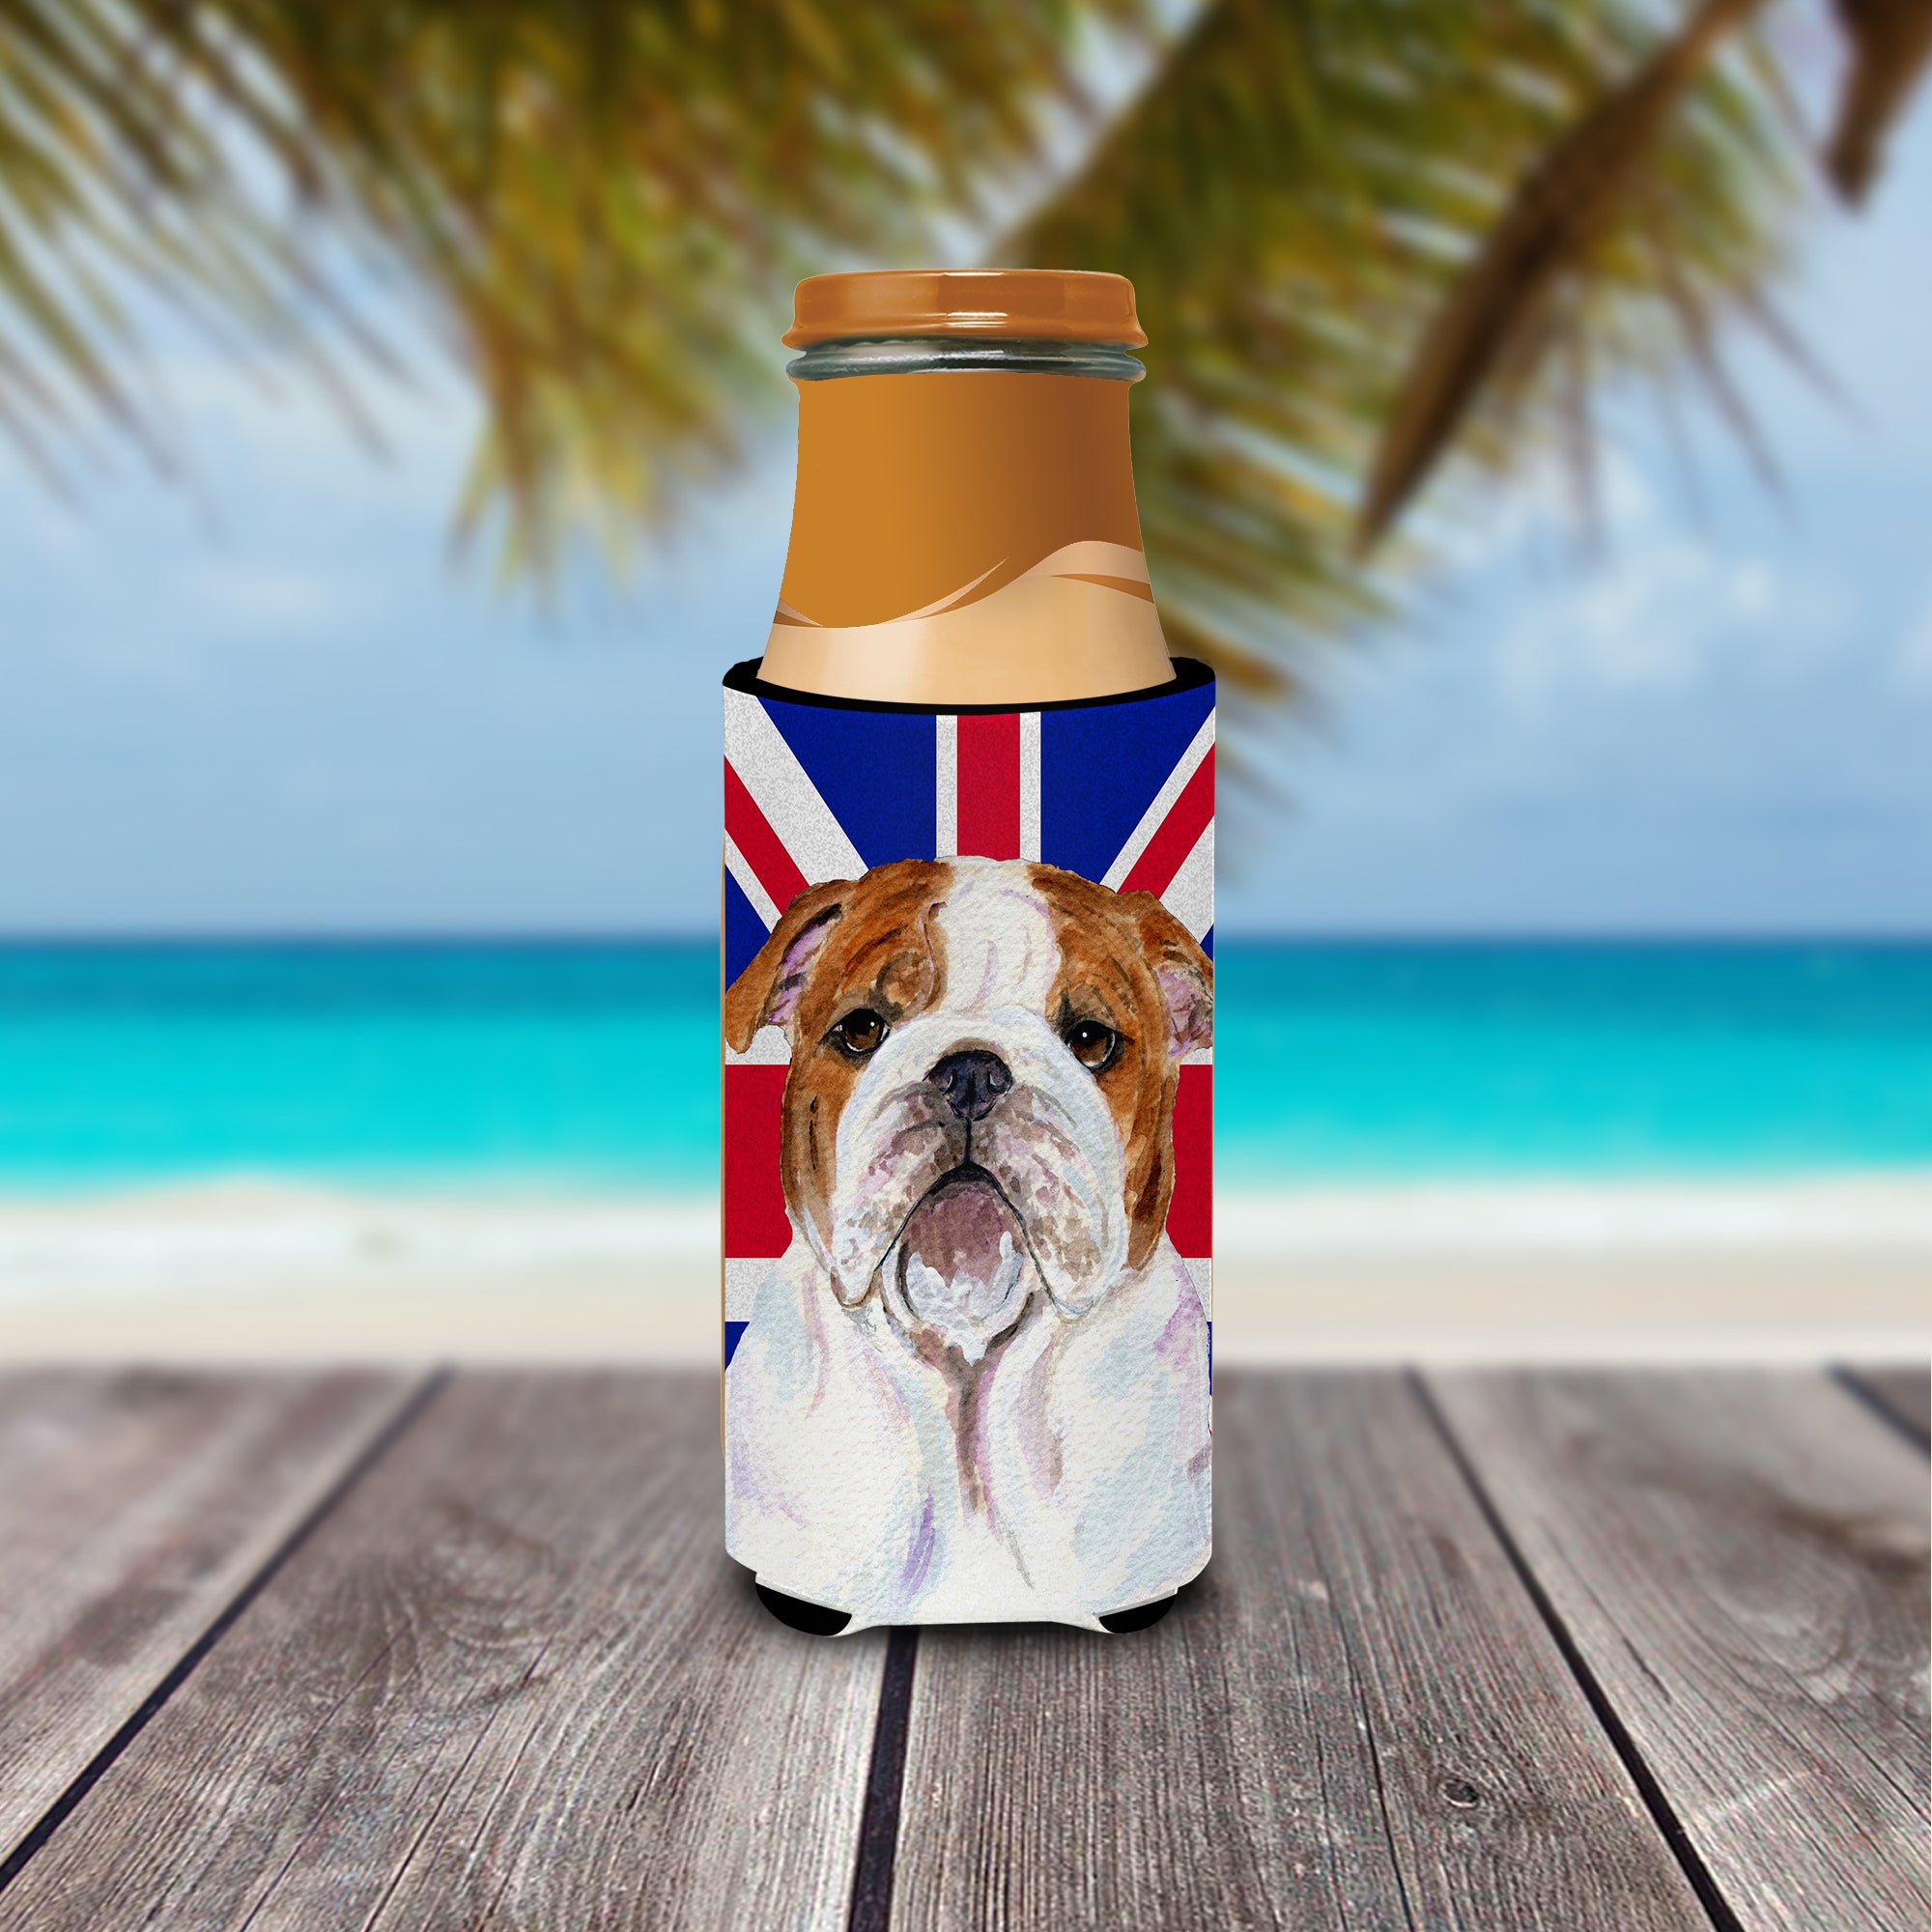 English Bulldog with English Union Jack British Flag Ultra Beverage Insulators for slim cans SS4926MUK